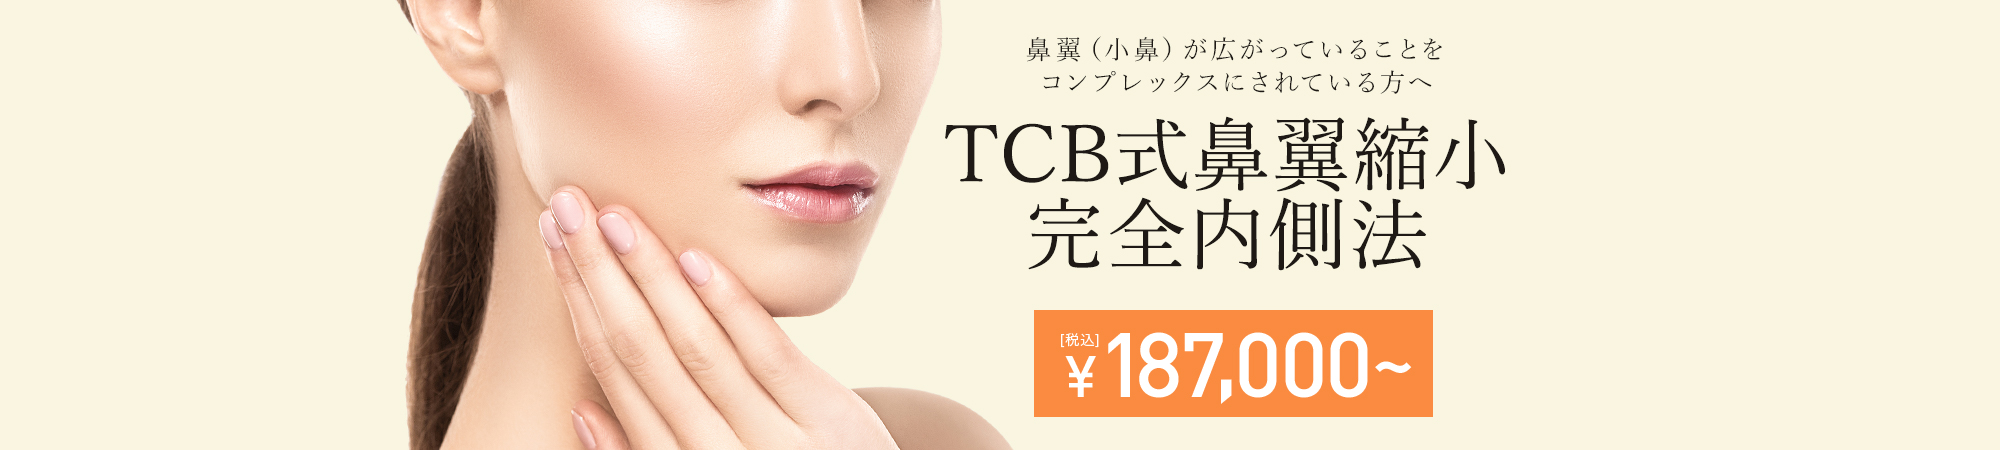 TCB東京中央美容外科 TCB式鼻翼縮小完全内側法